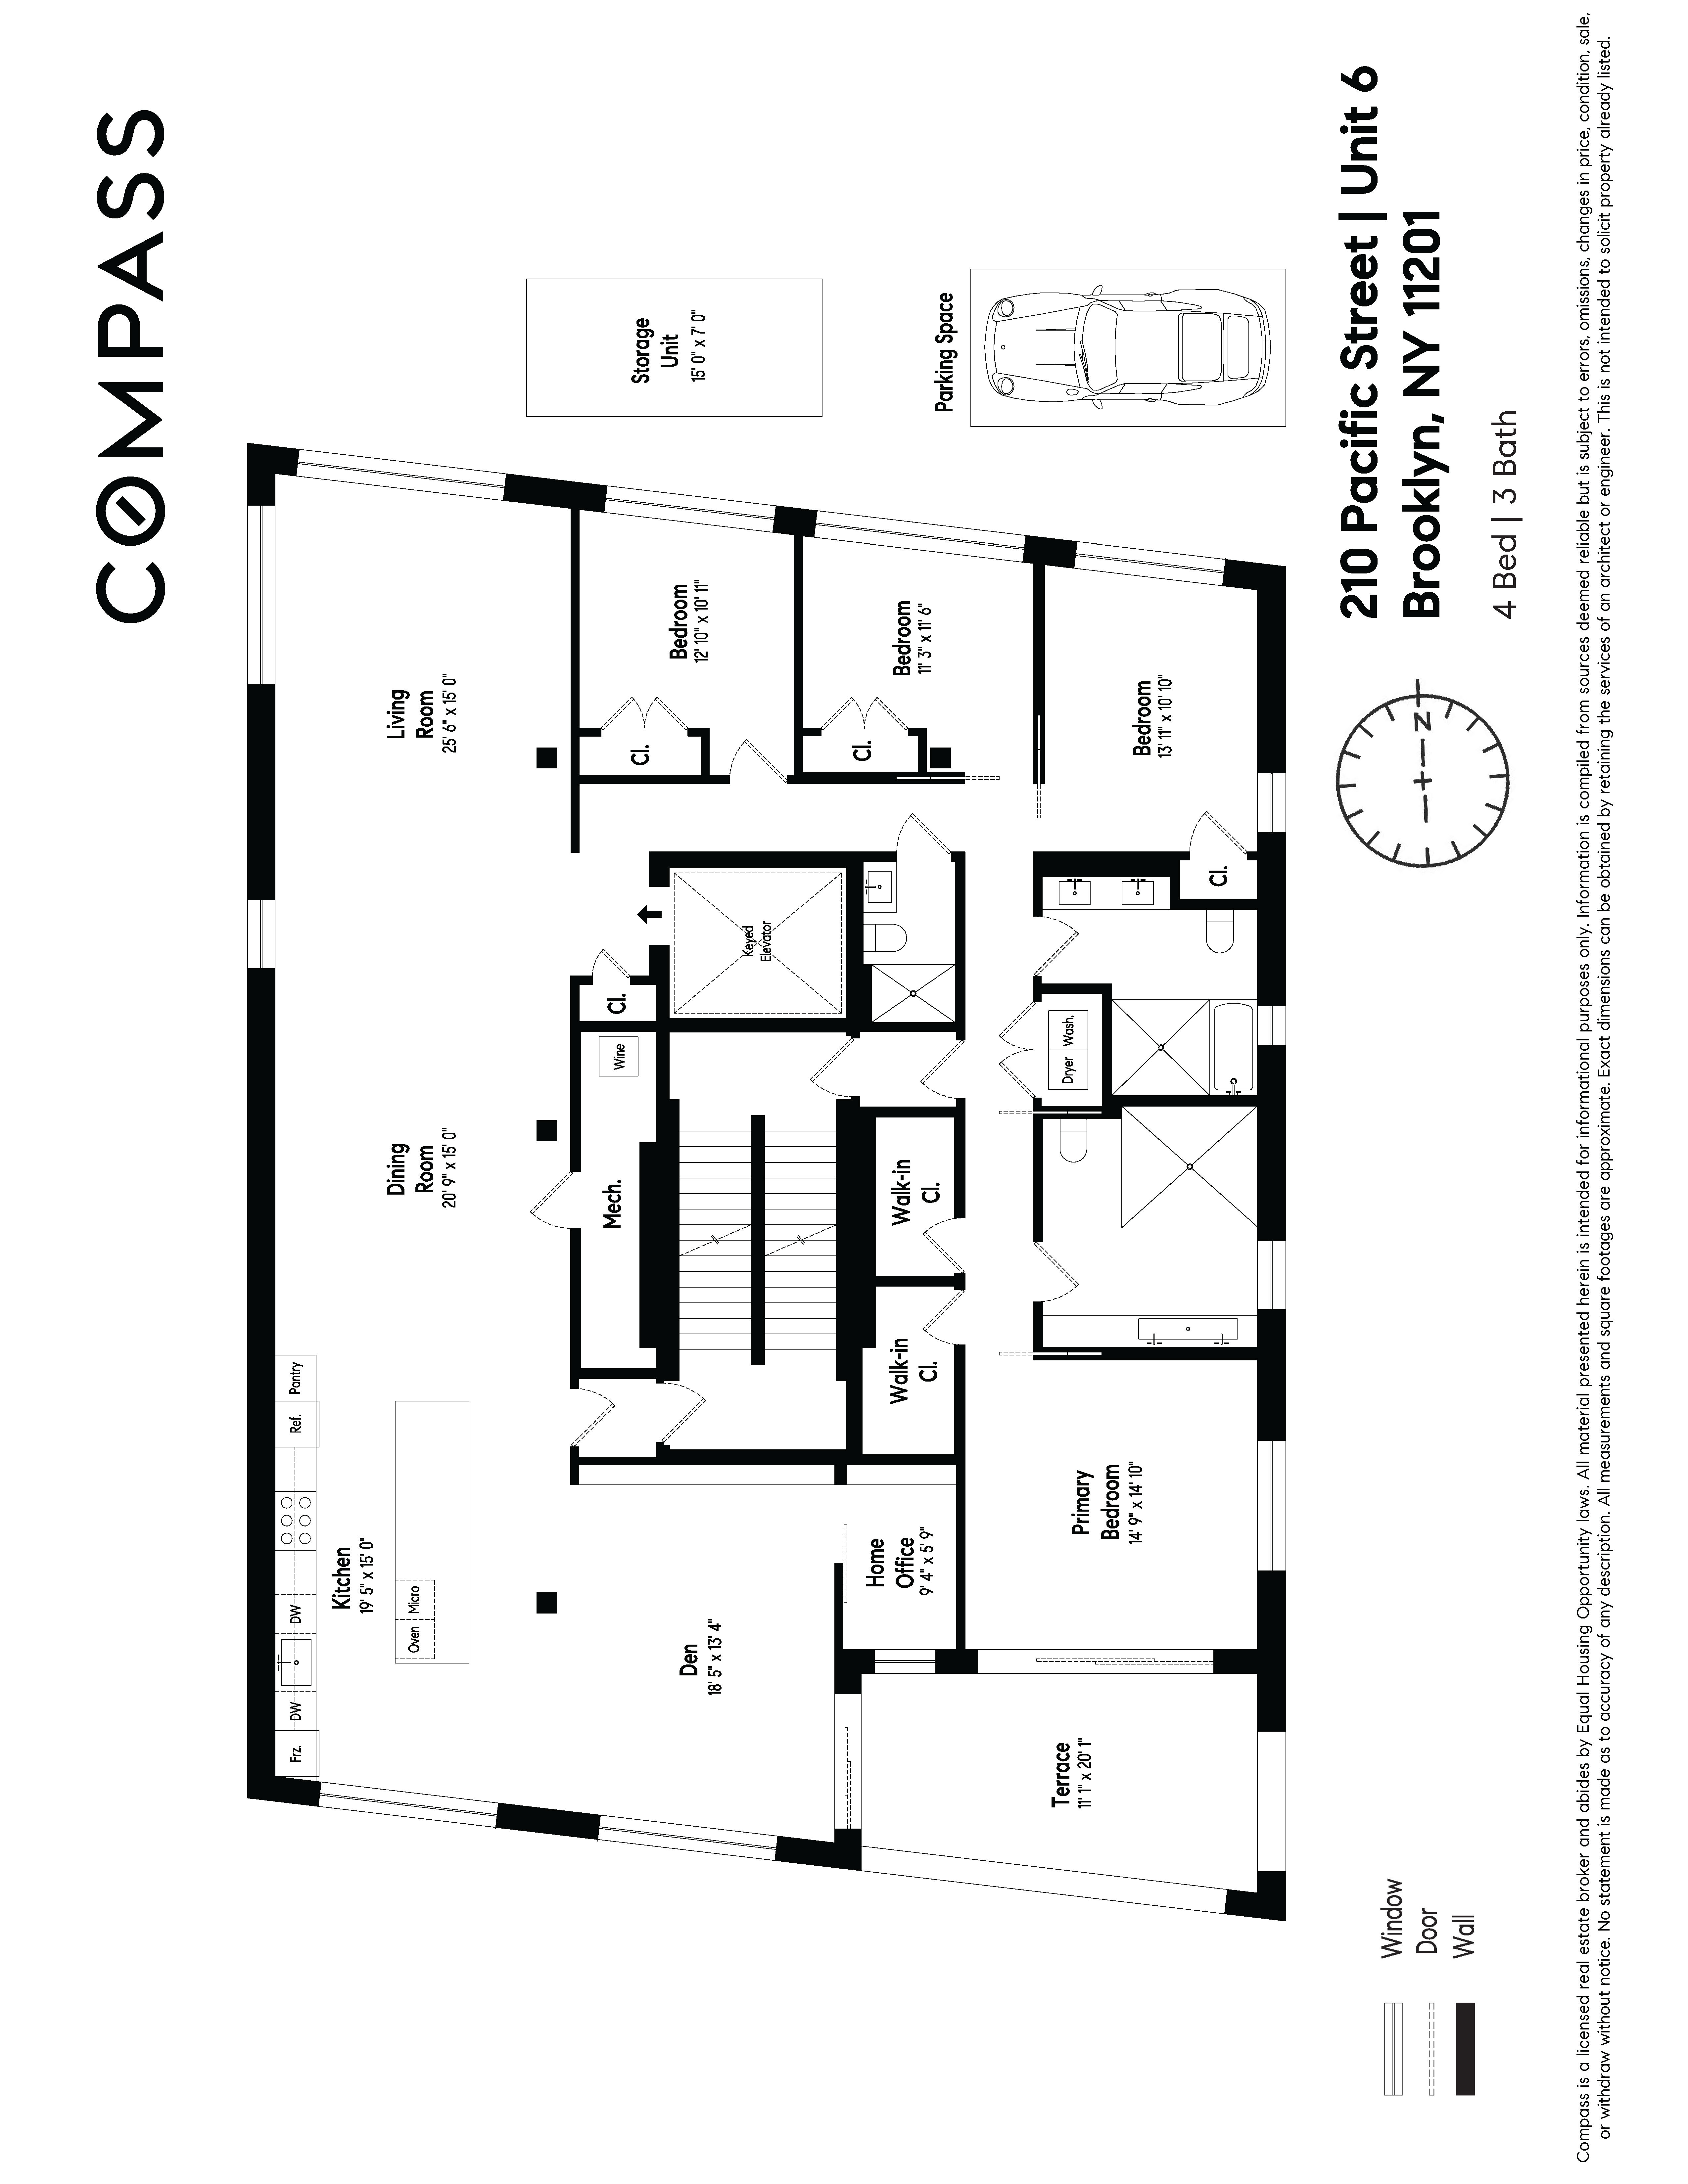 Floorplan for 210 Pacific Street, 6